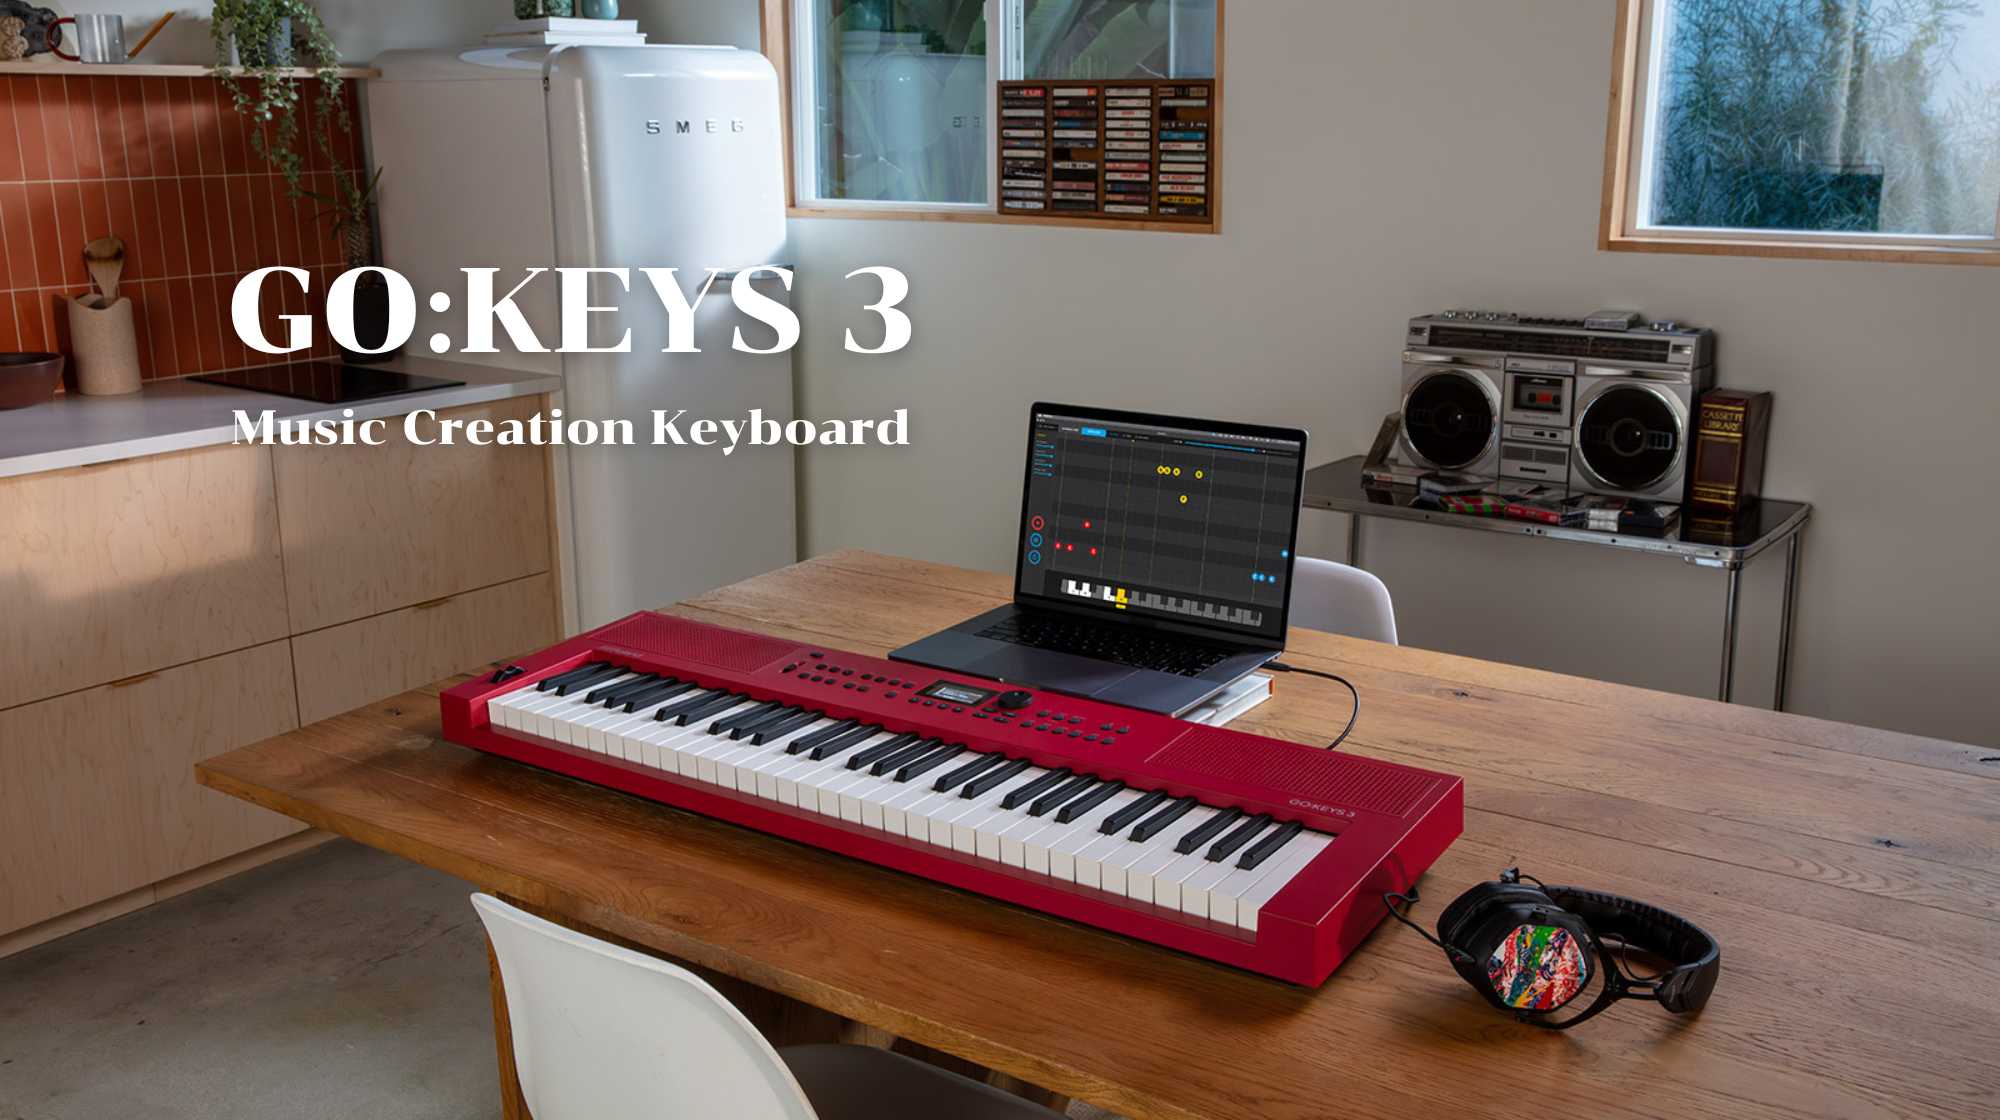 GOKEYS 3 Music Creation Keyboard